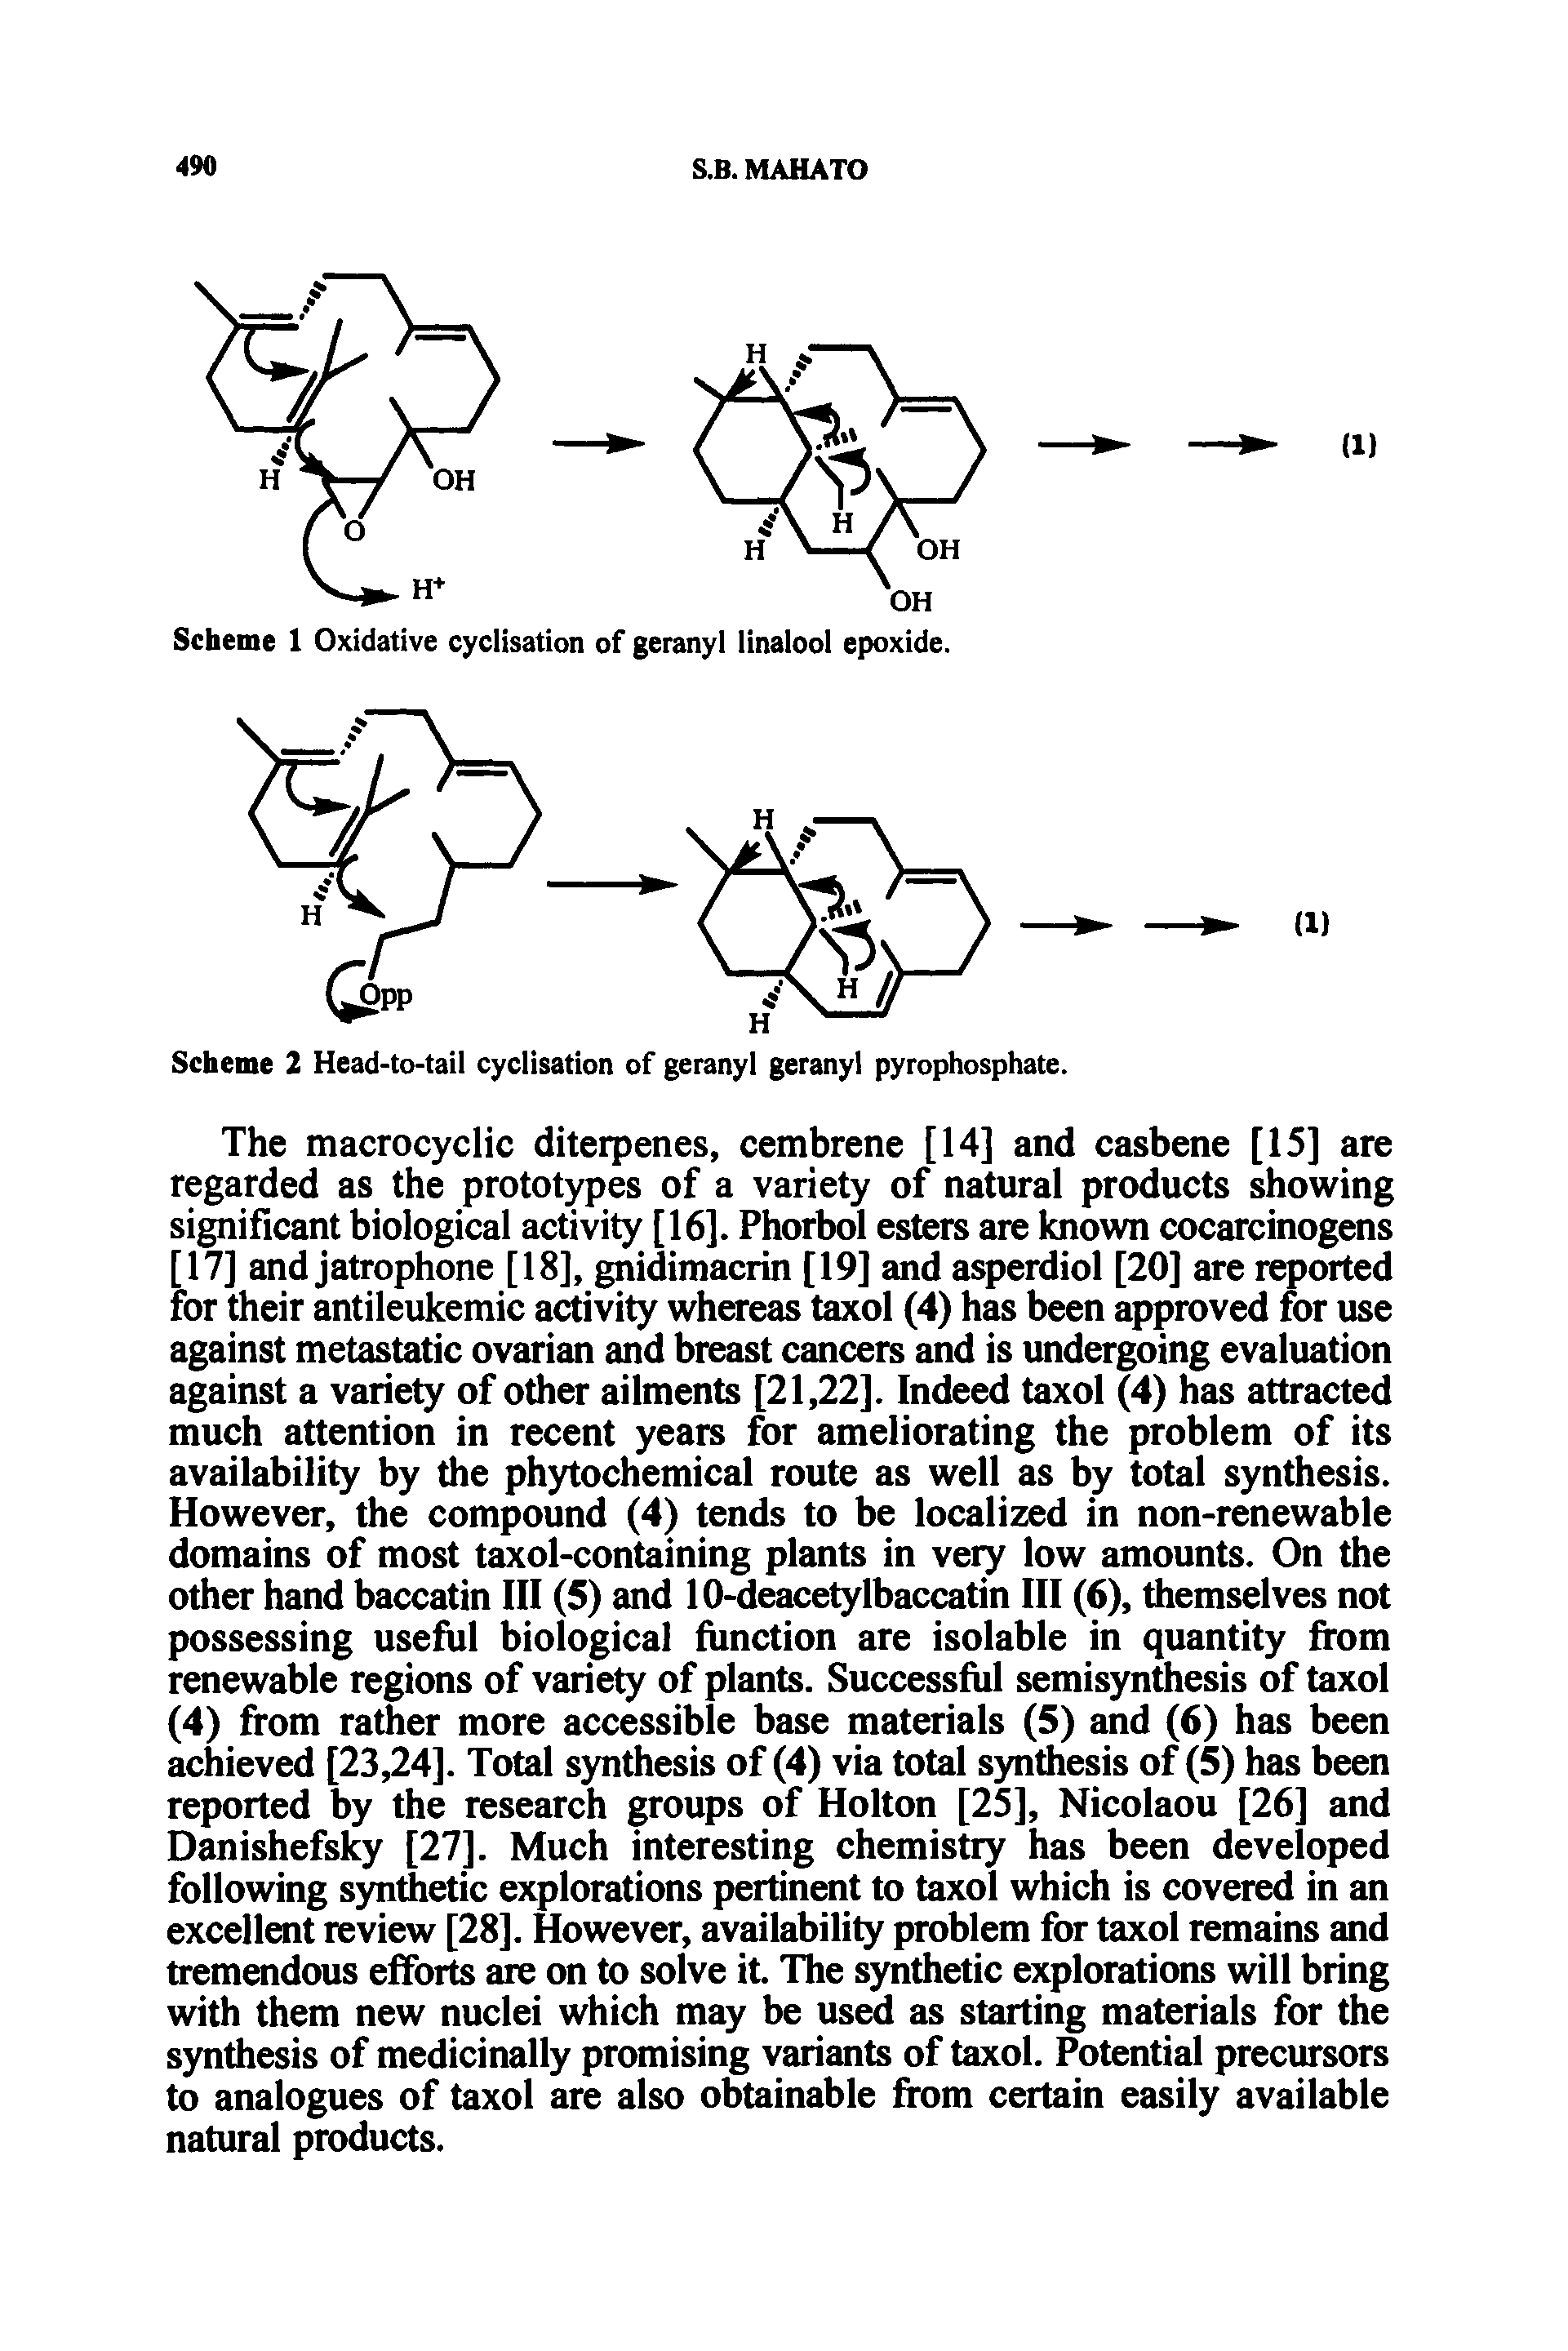 Scheme 1 Oxidative cyclisation of geranyl linalool epoxide.